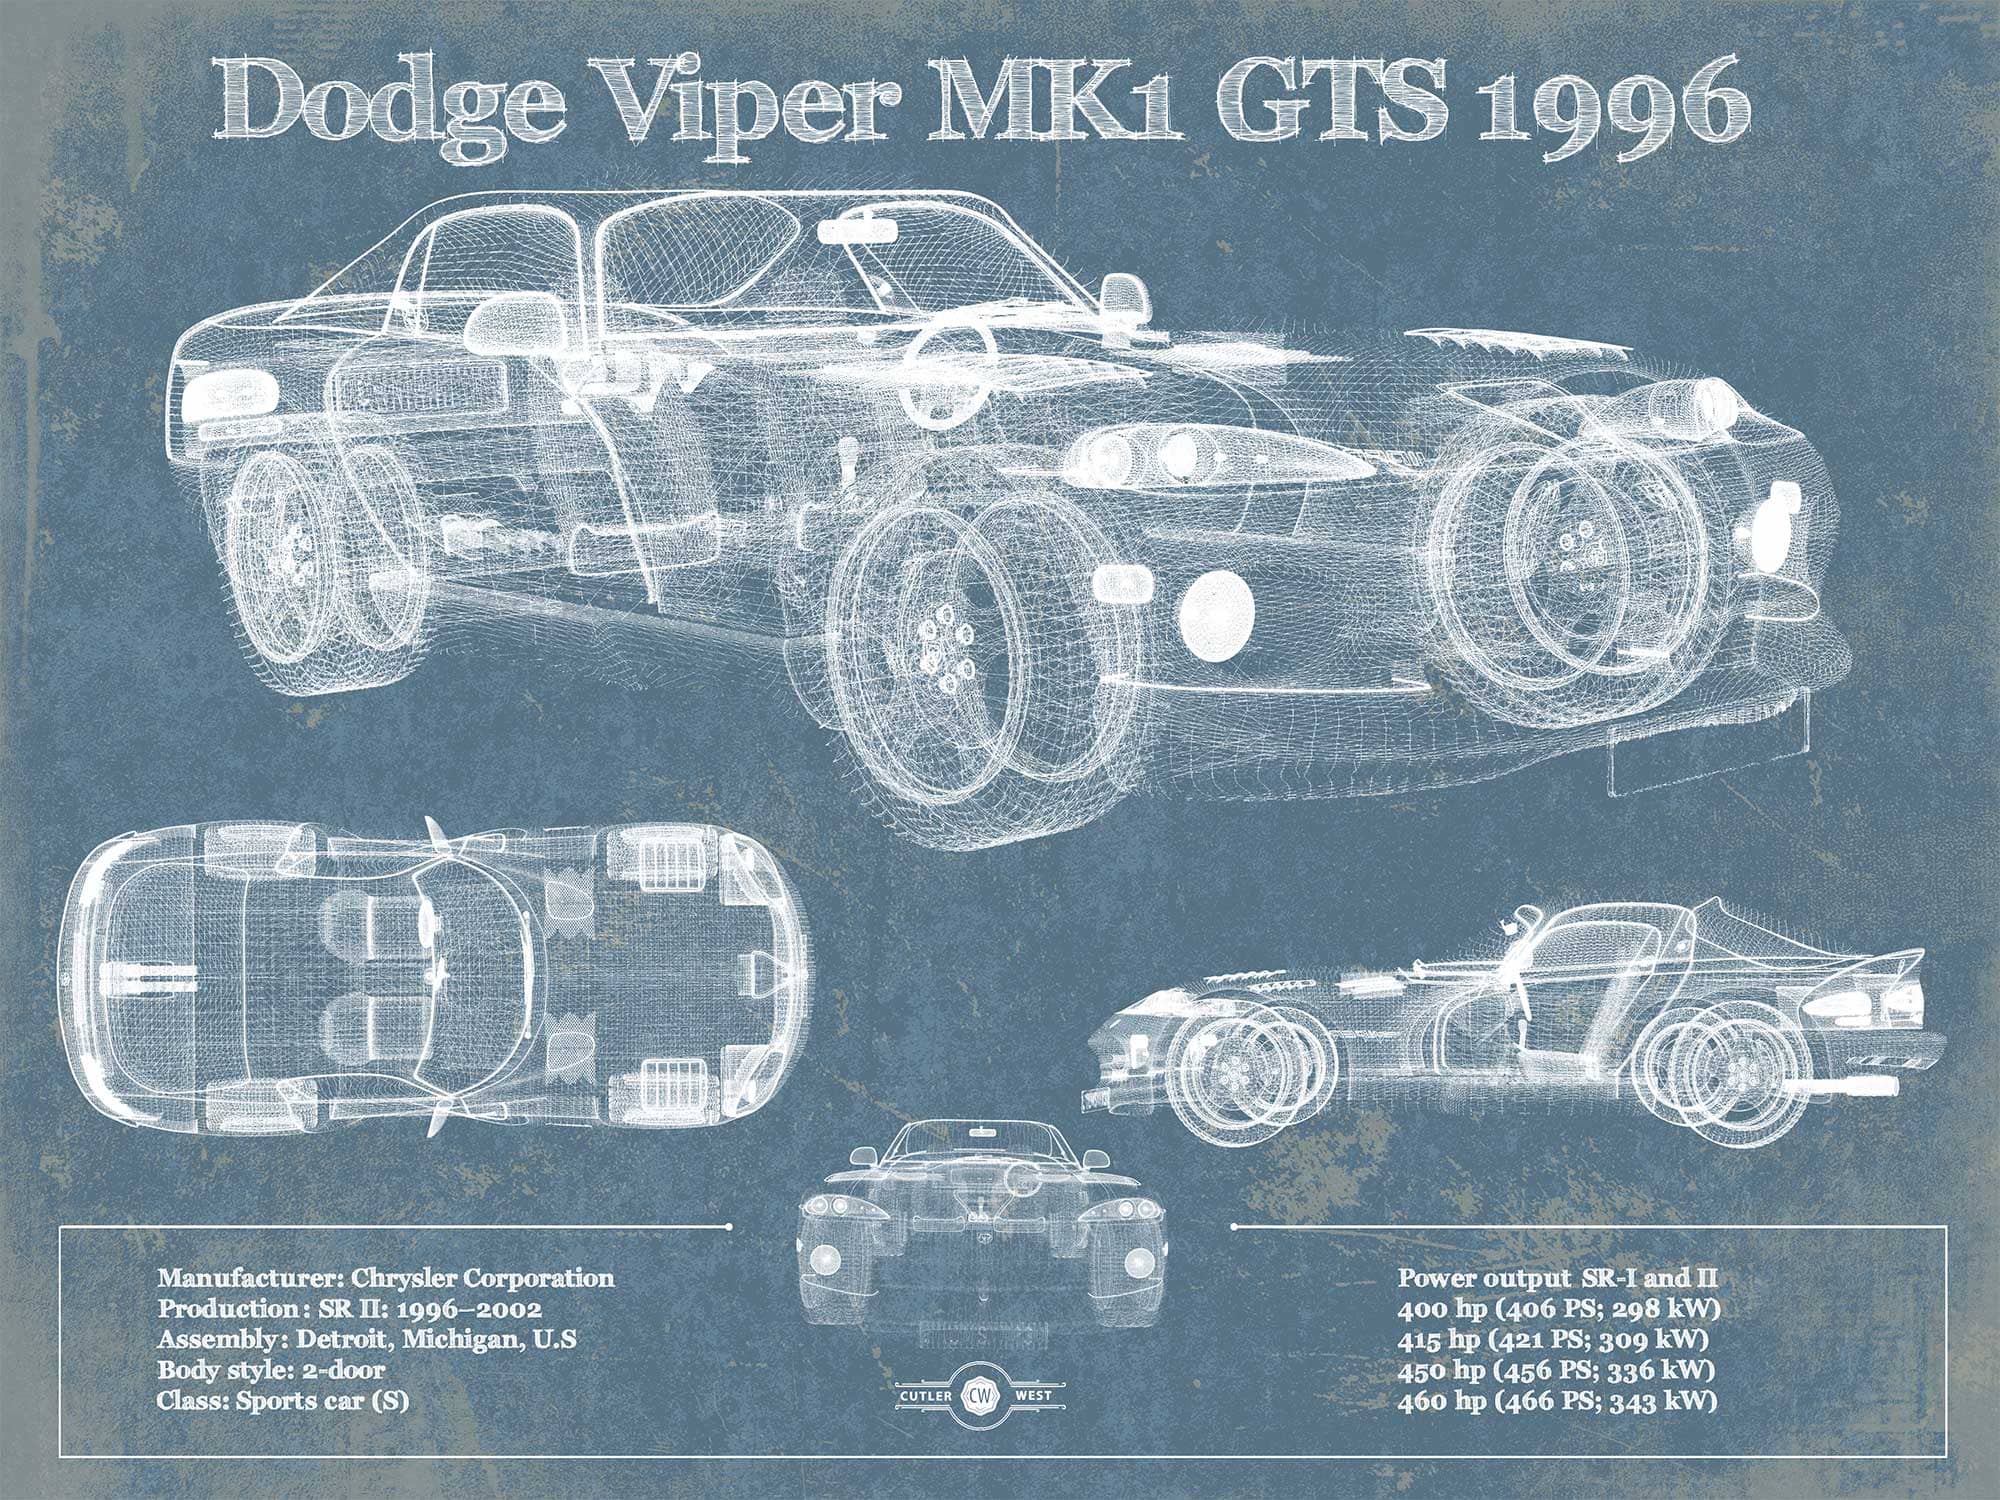 Cutler West Dodge Collection 14" x 11" / Unframed Dodge Viper MK1 GTS 1996 Blueprint Vintage Auto Print 833110108